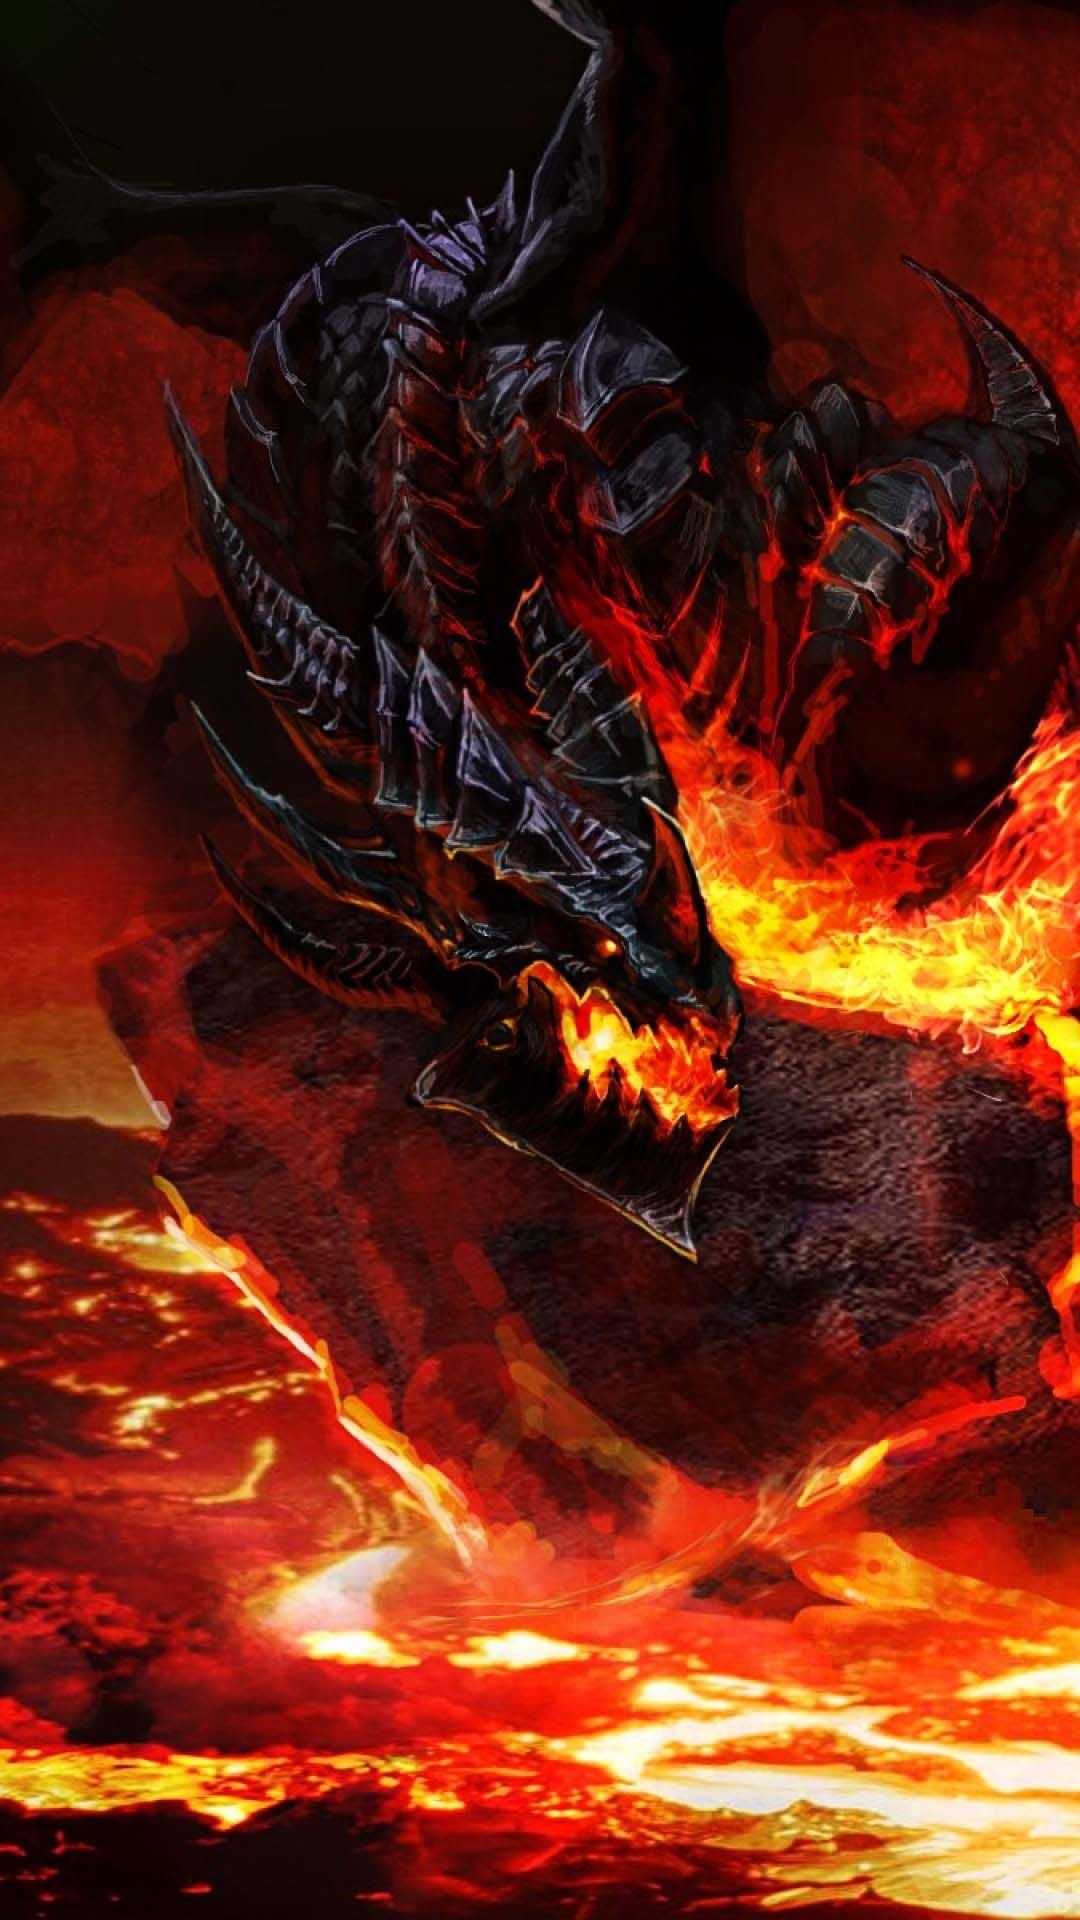  Drachen Hintergrundbild 1080x1920. Dragon Wallpaper 45. Dragon wallpaper iphone, Dragon image, Fire dragon